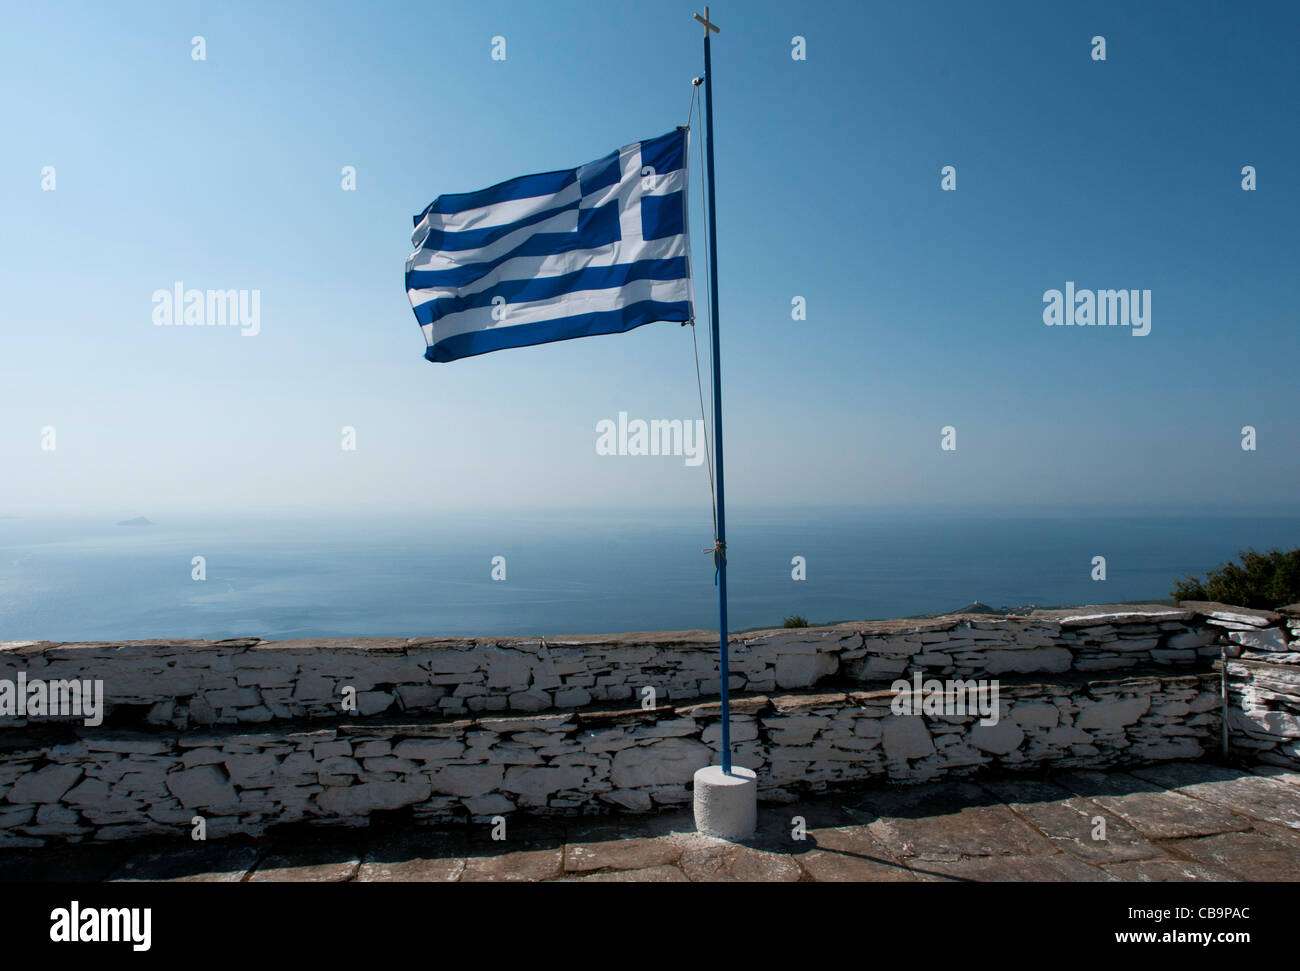 Greek flag flying over the Aegean sea, Ikaria island, Greece Stock Photo